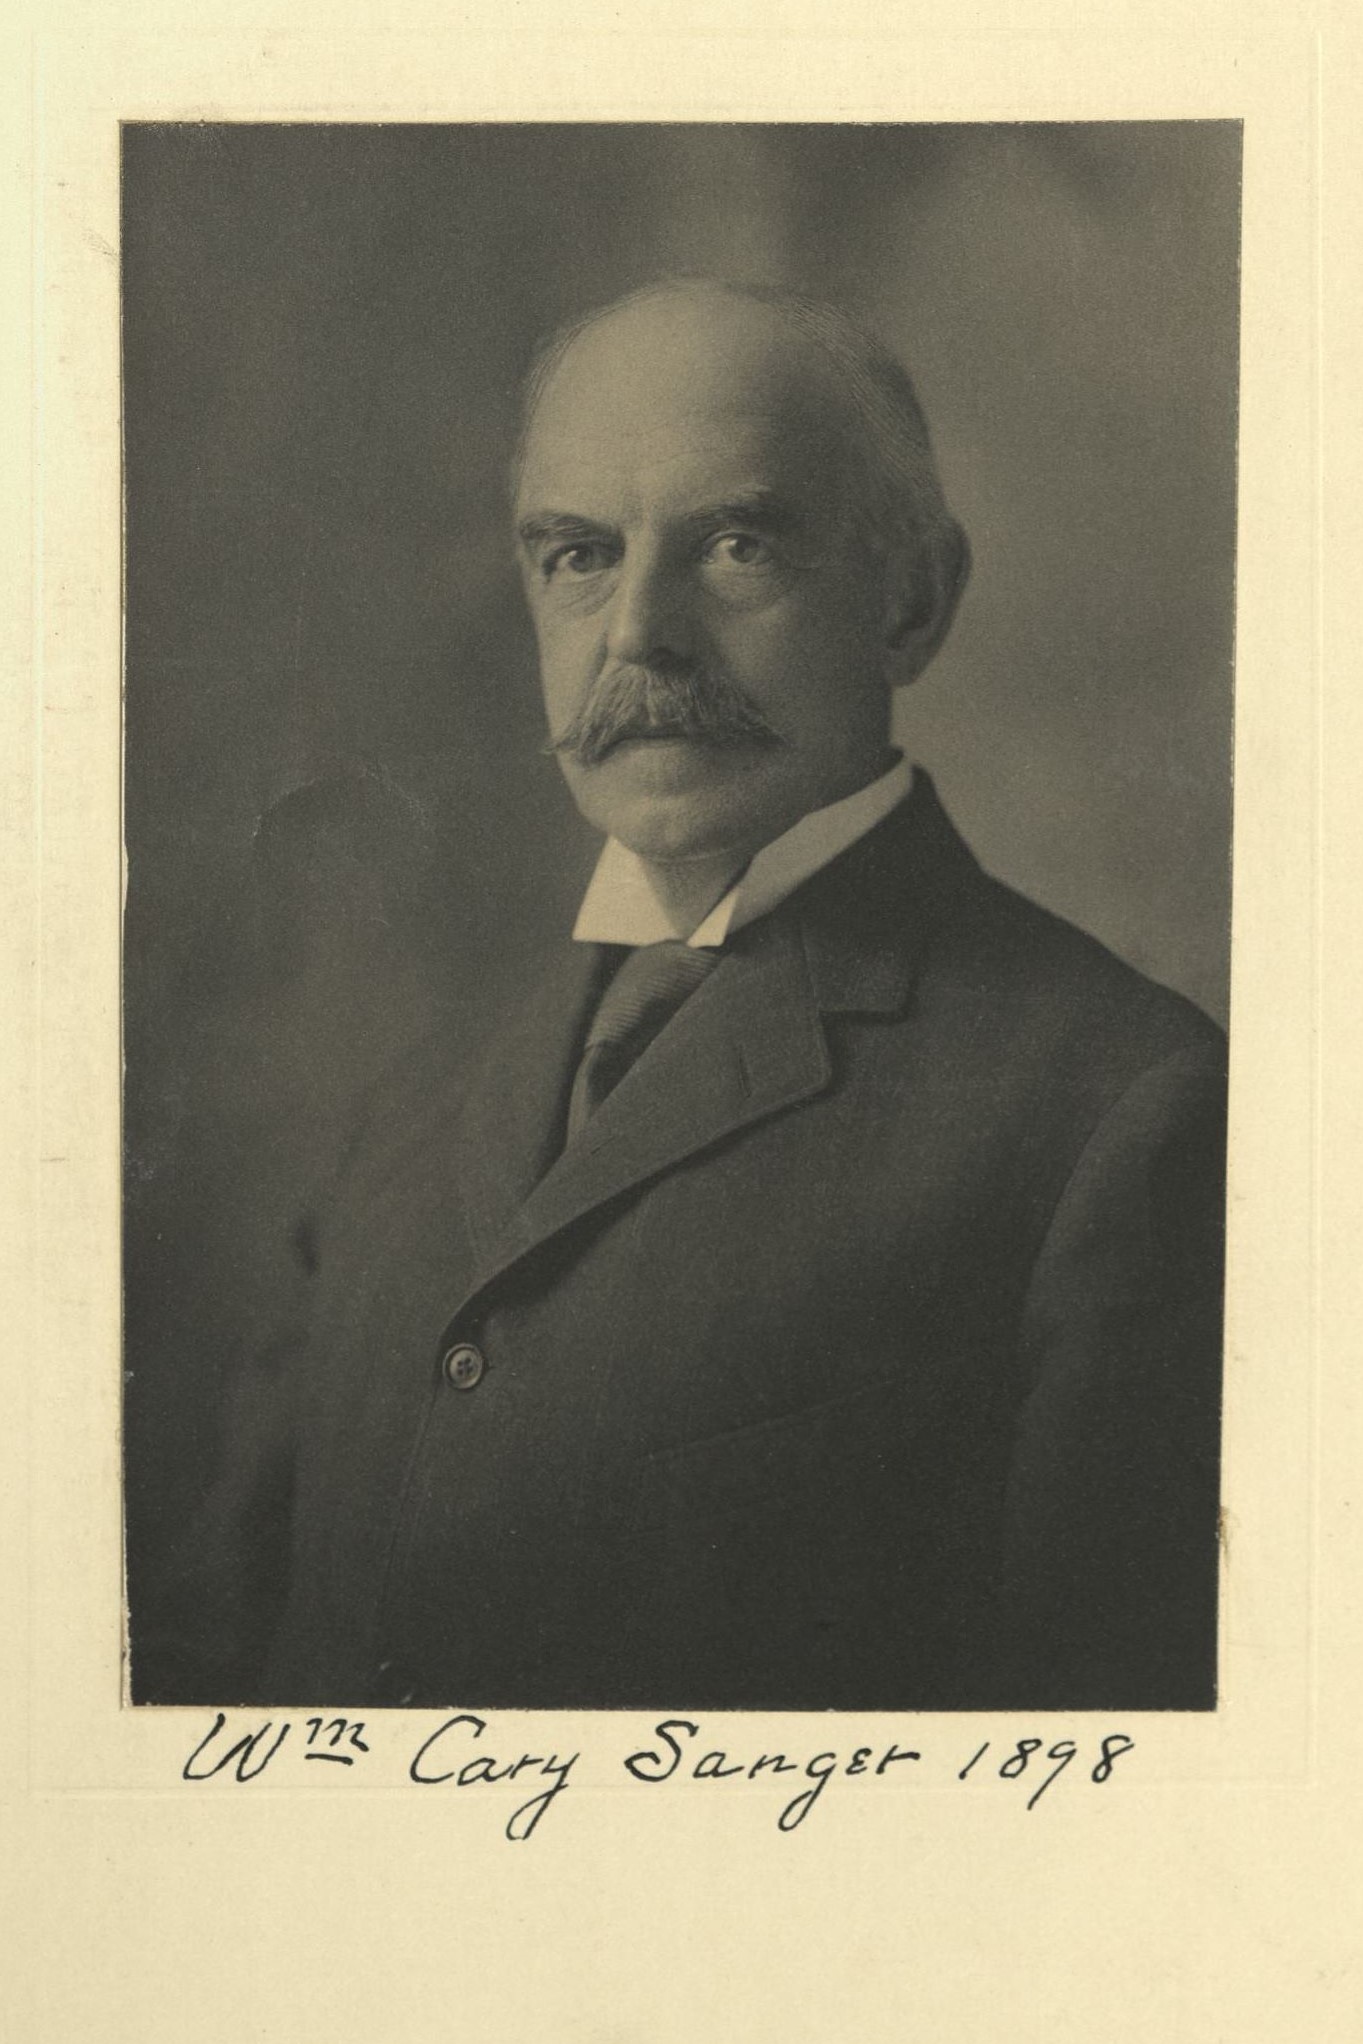 Member portrait of William Cary Sanger